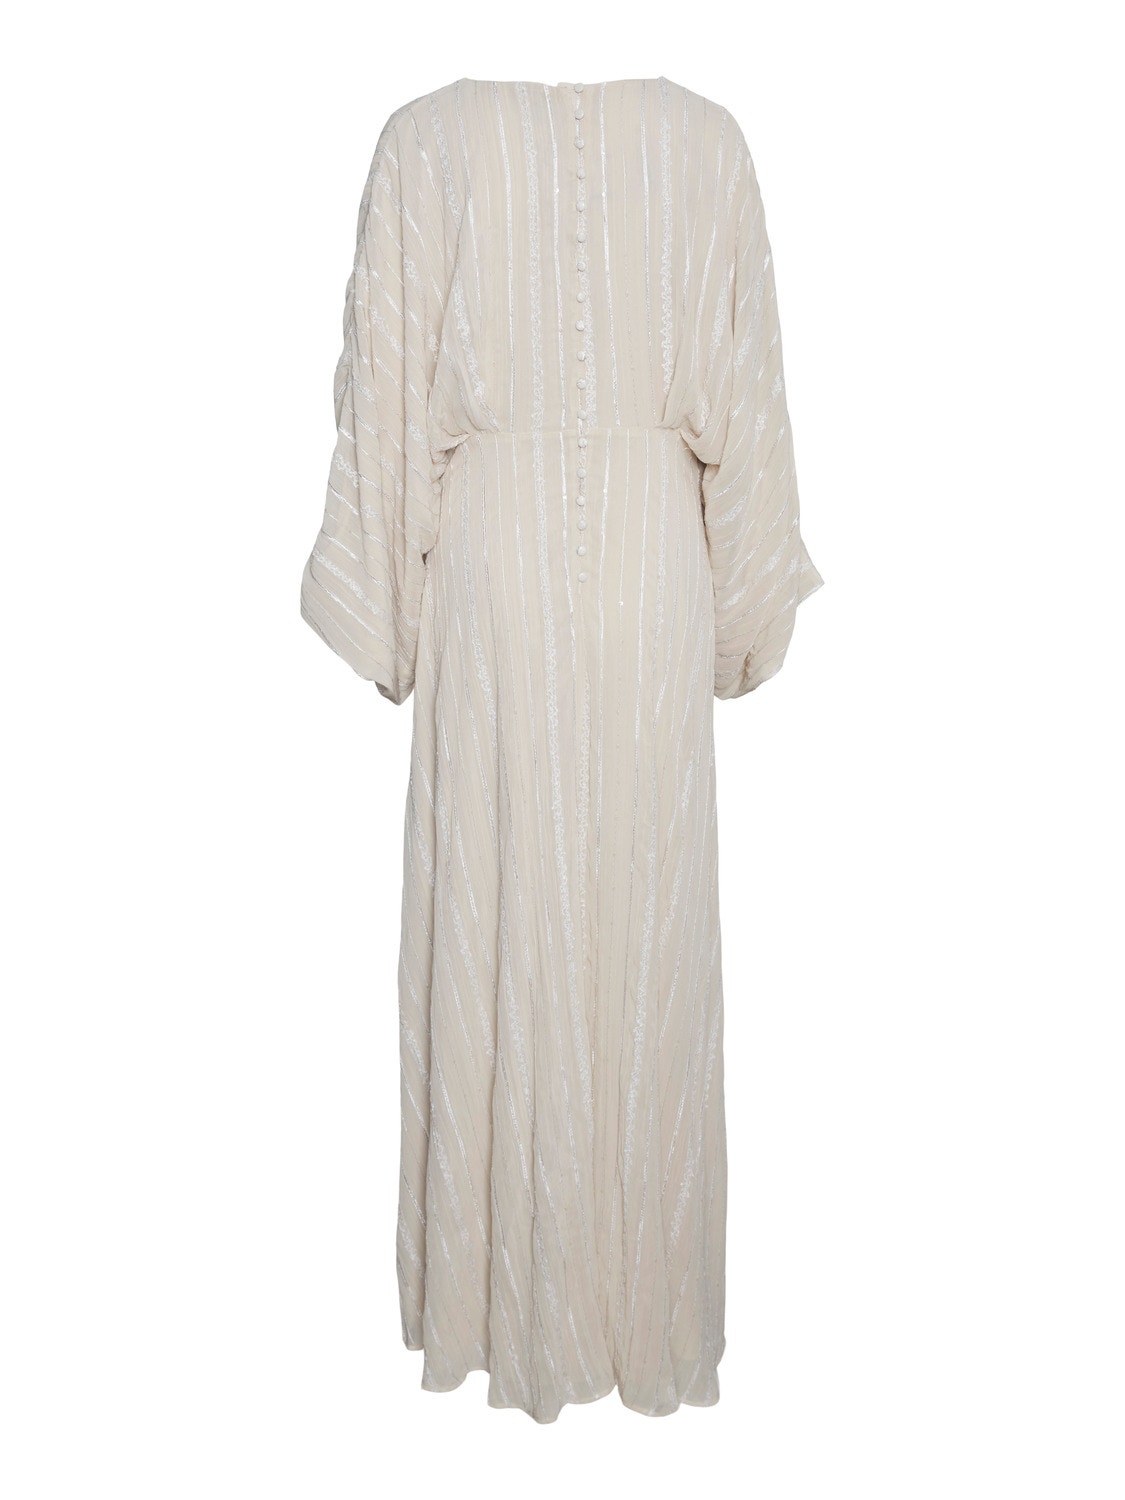 Vero Moda VMTARA Long dress -White Swan - 10304254